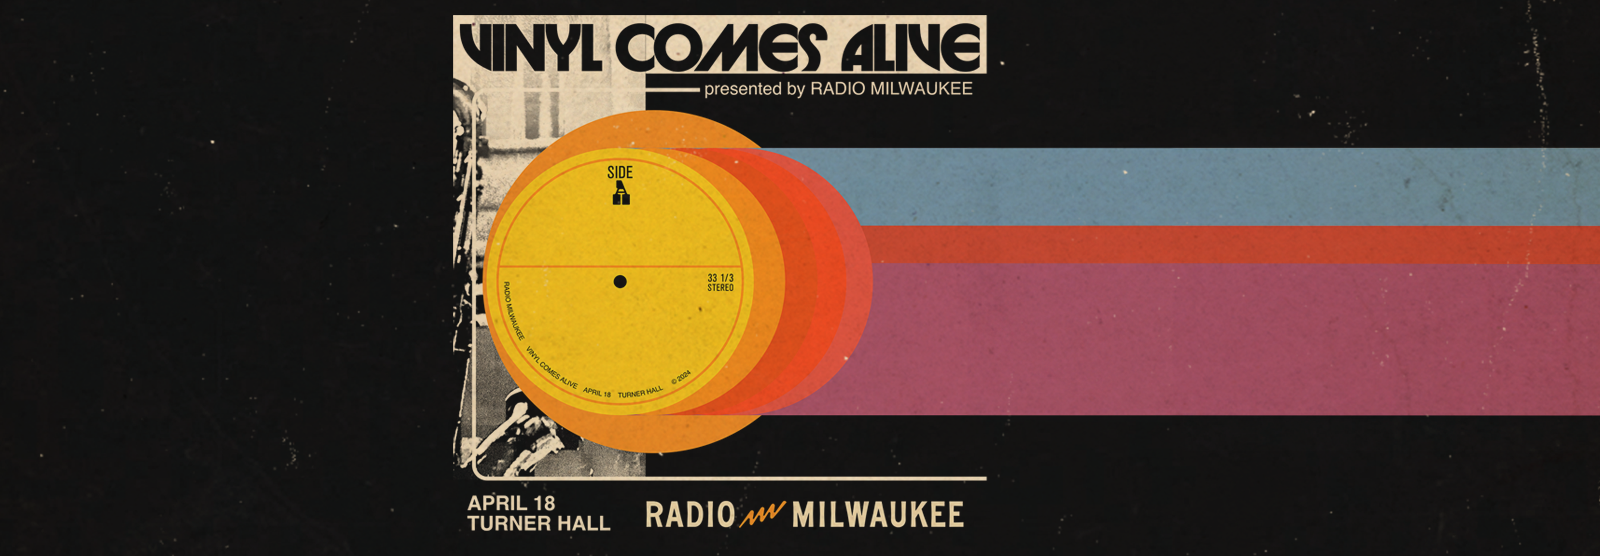 Vinyl Comes Alive Presented By Radio Milwaukee